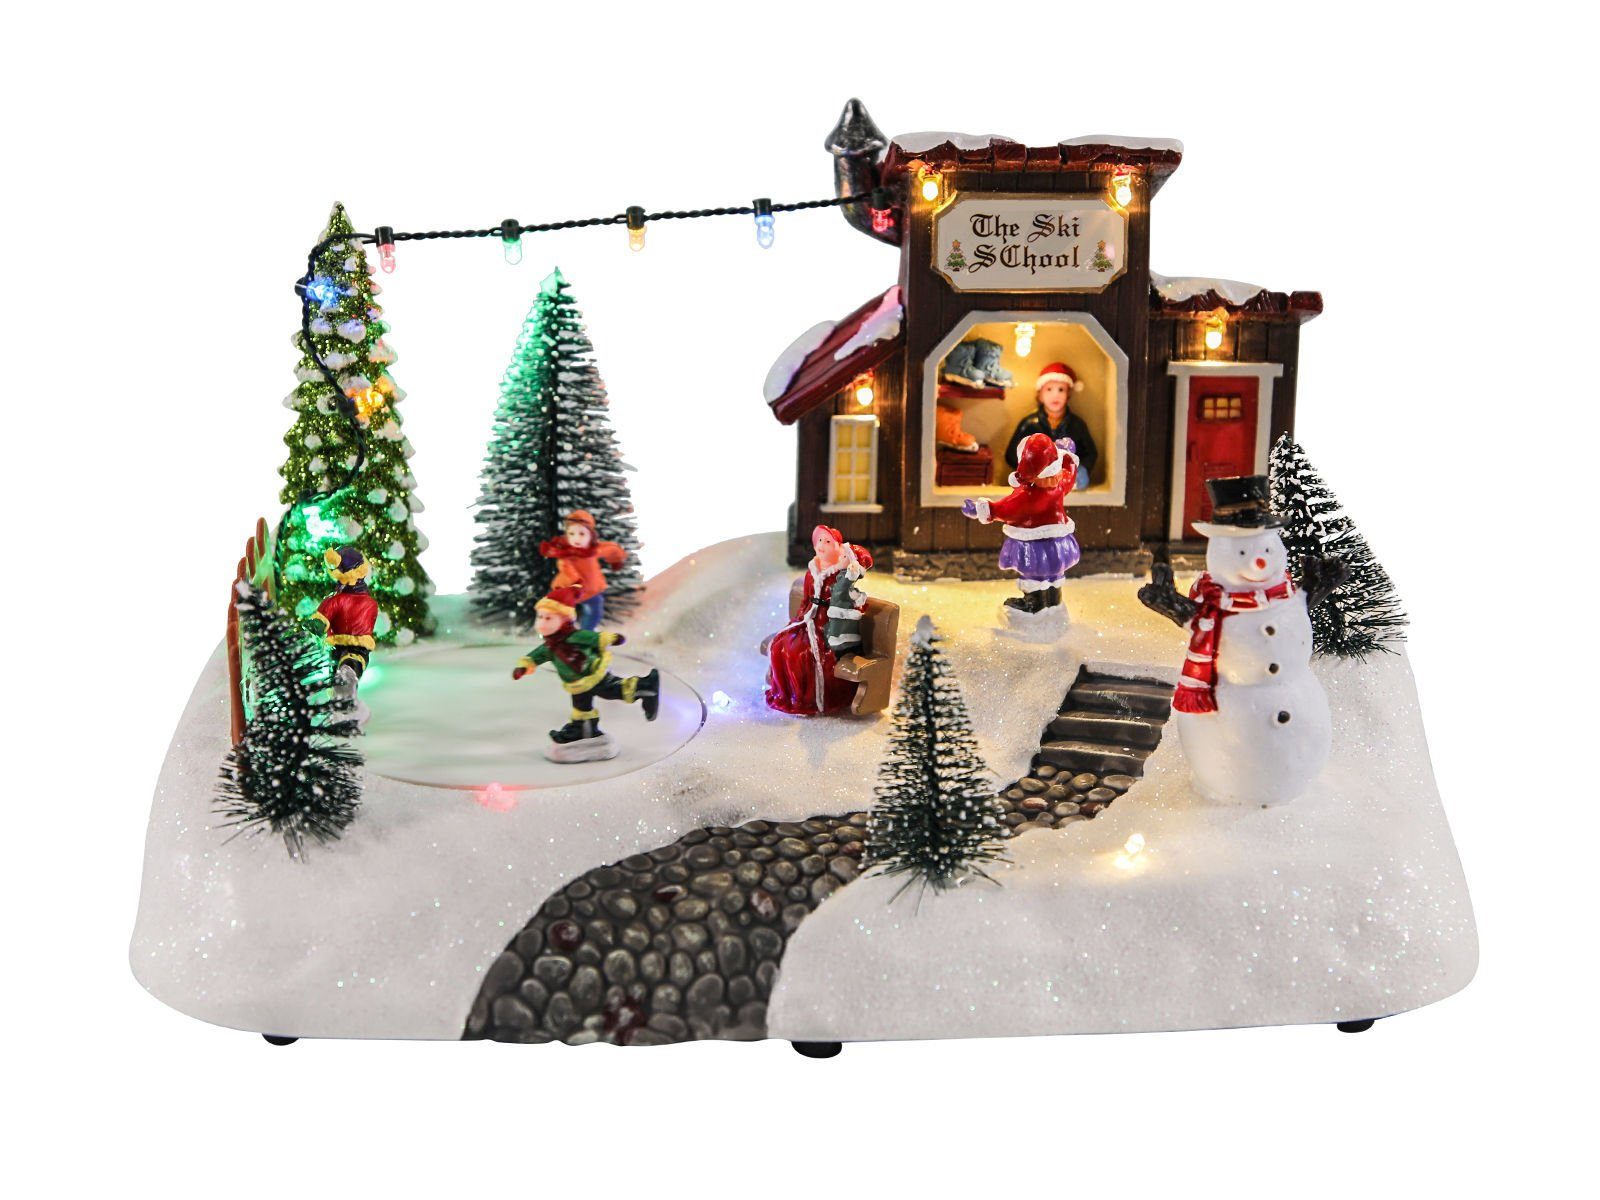 Spetebo Weihnachtsszene Eisbahn mit fahrenden Figuren - THE SKI SCHOOL